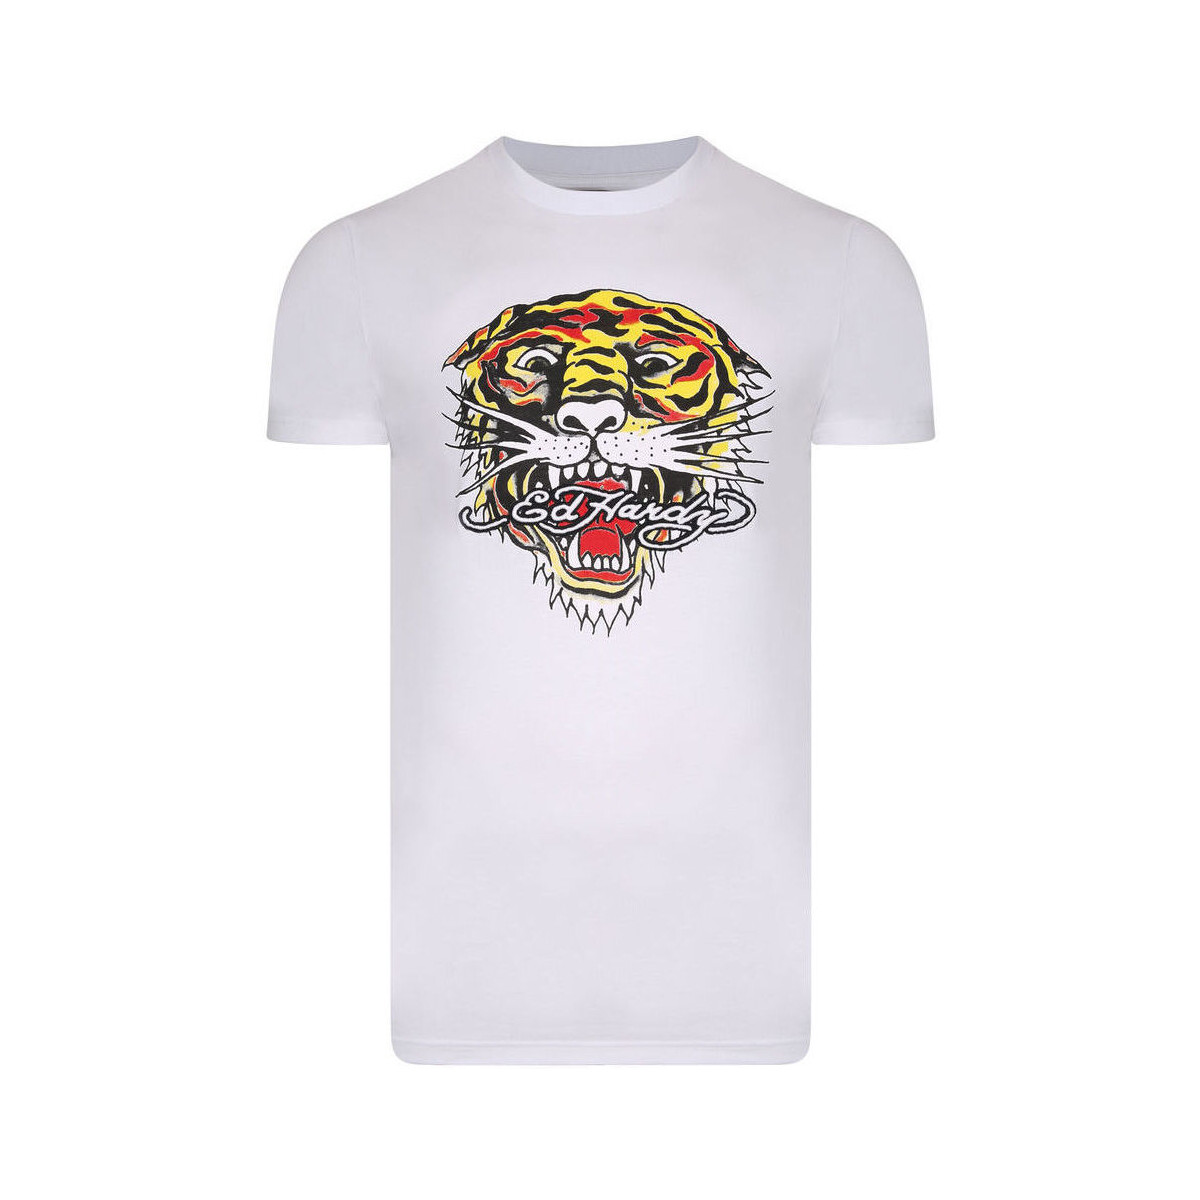 textil Hombre Camisetas manga corta Ed Hardy Mt-tiger t-shirt Blanco